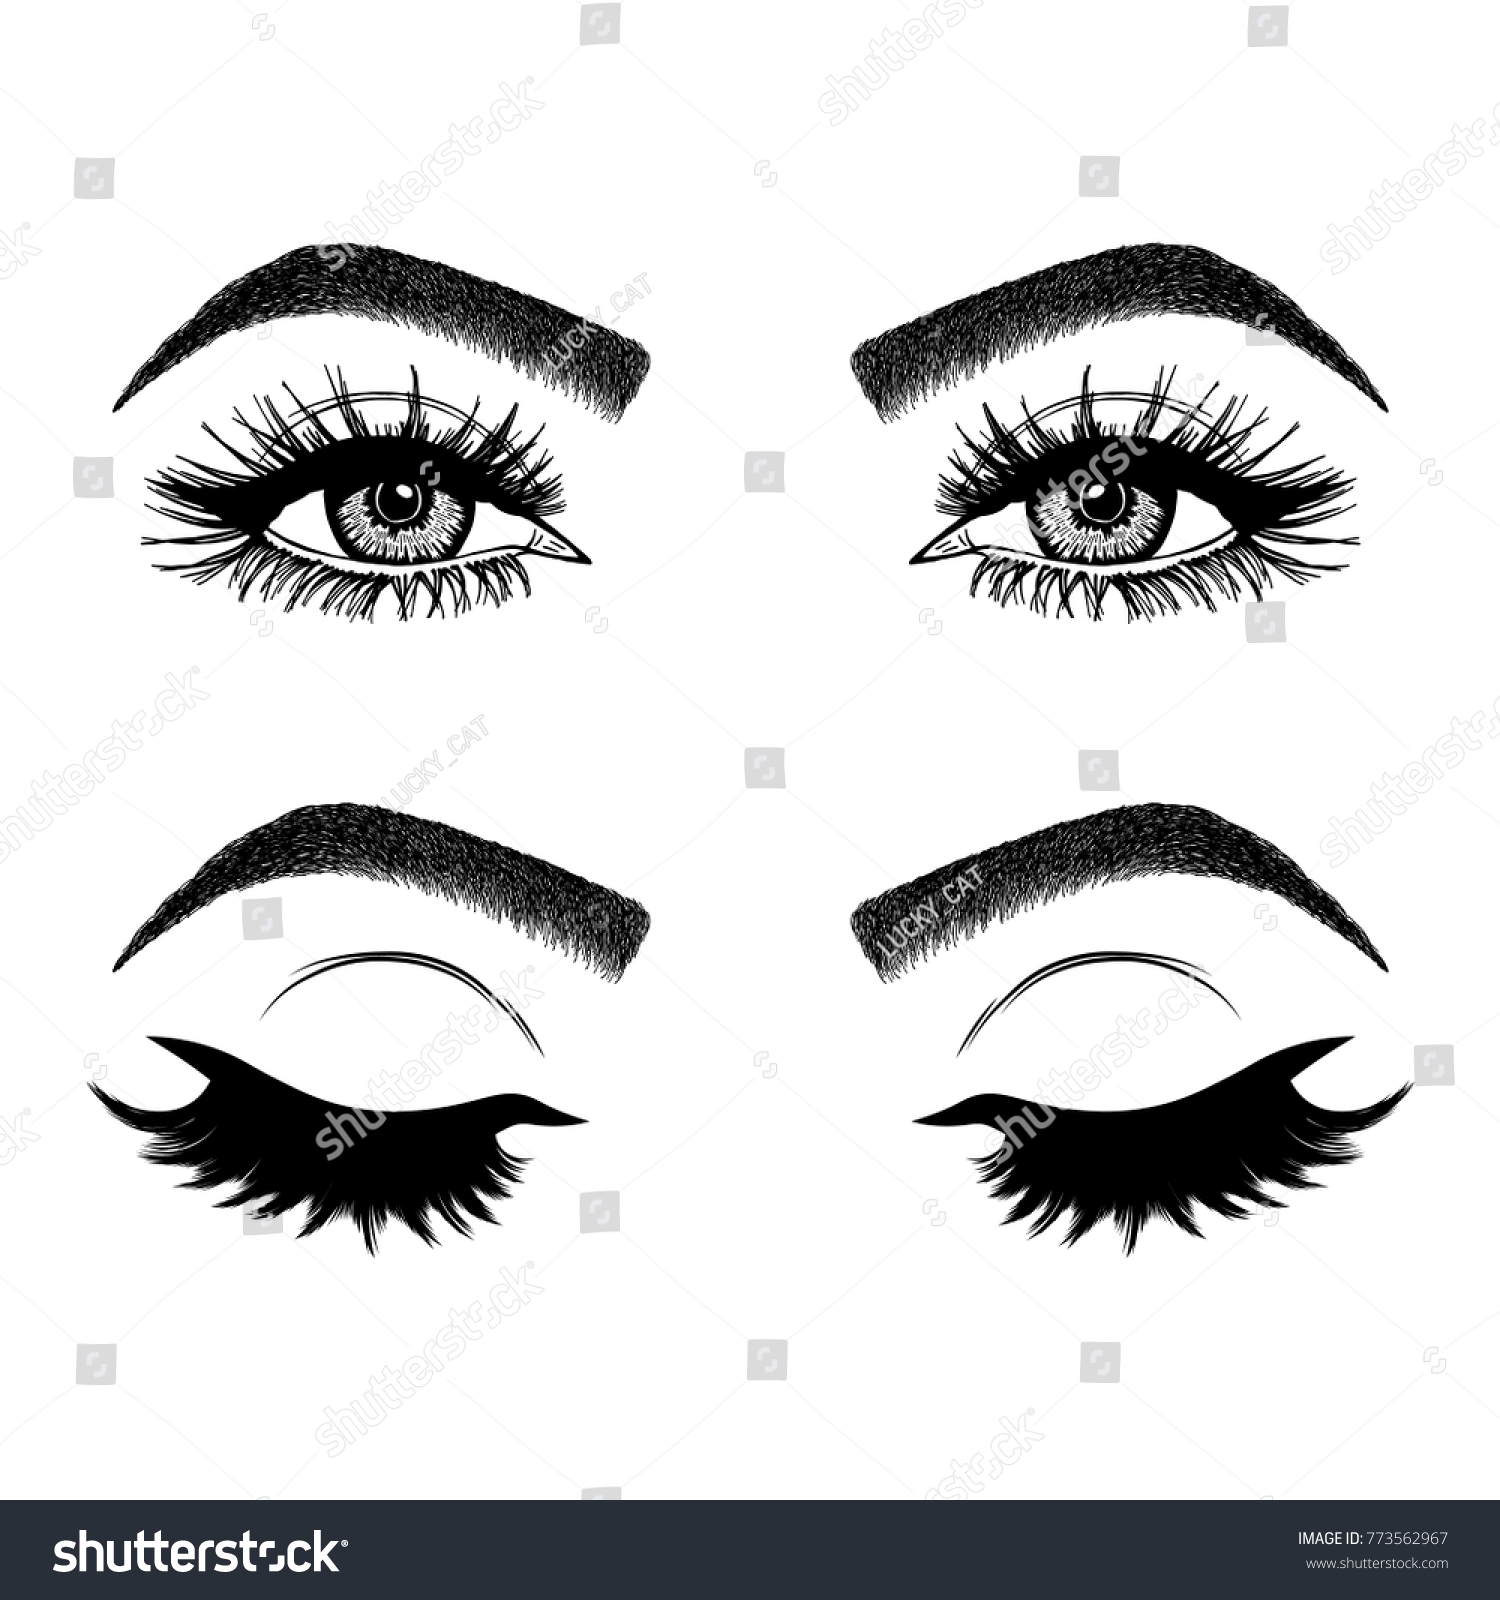 Illustration Womans Eyes Eyelashes Eyebrows Makeup Stock Vector Royalty Free 773562967 3775